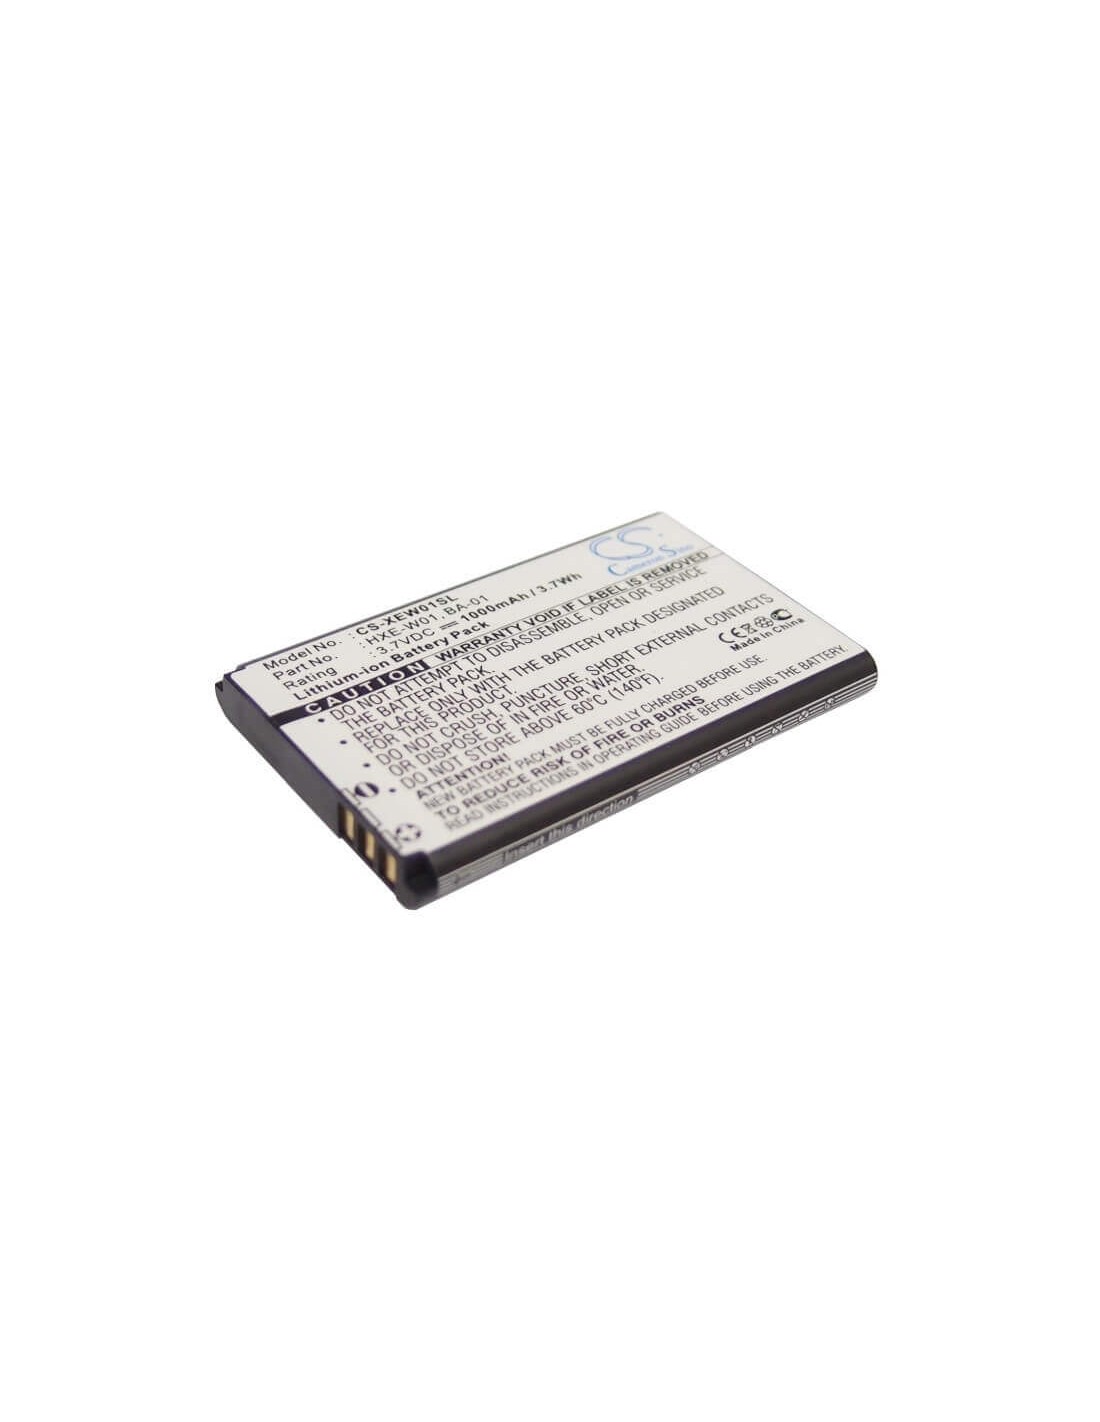 Battery for Altina Bluetooth Gps Receiver, B&b, Ps-3100 3.7V, 1000mAh - 3.70Wh